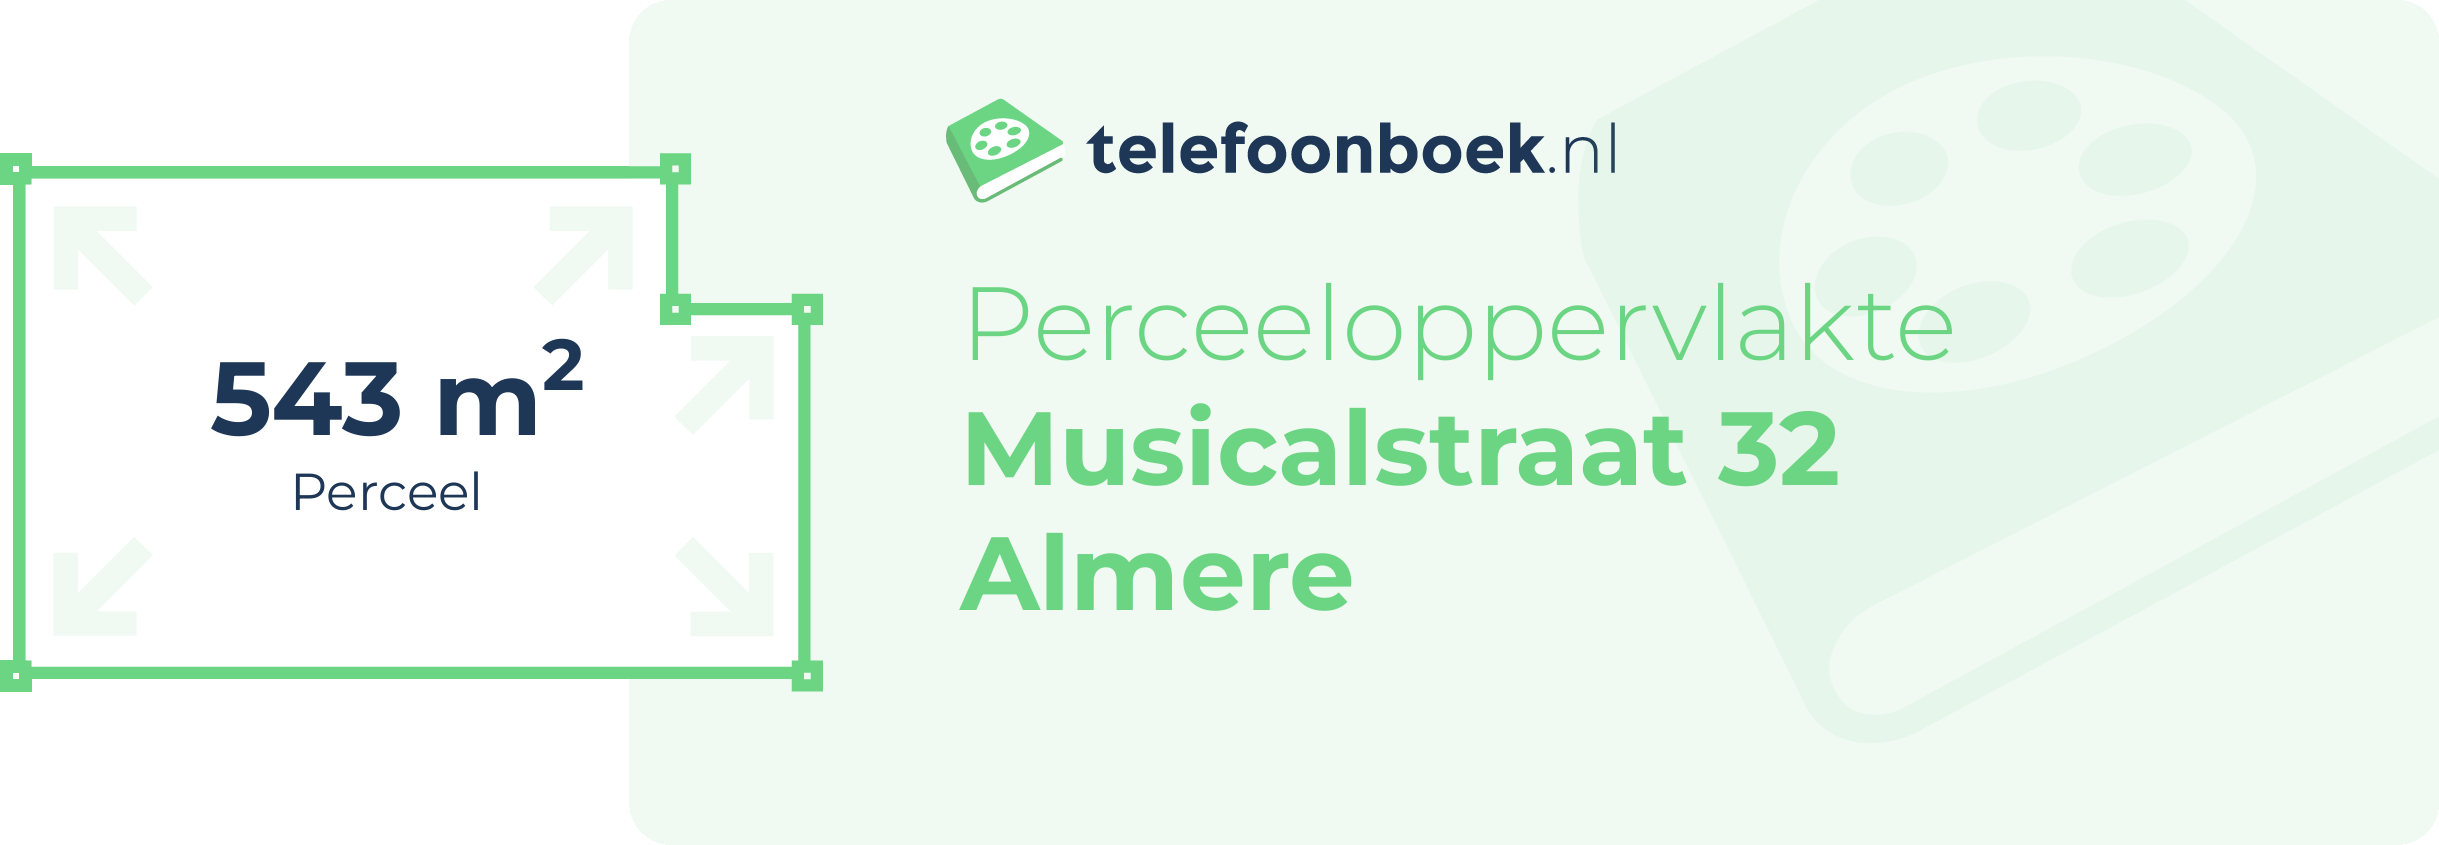 Perceeloppervlakte Musicalstraat 32 Almere